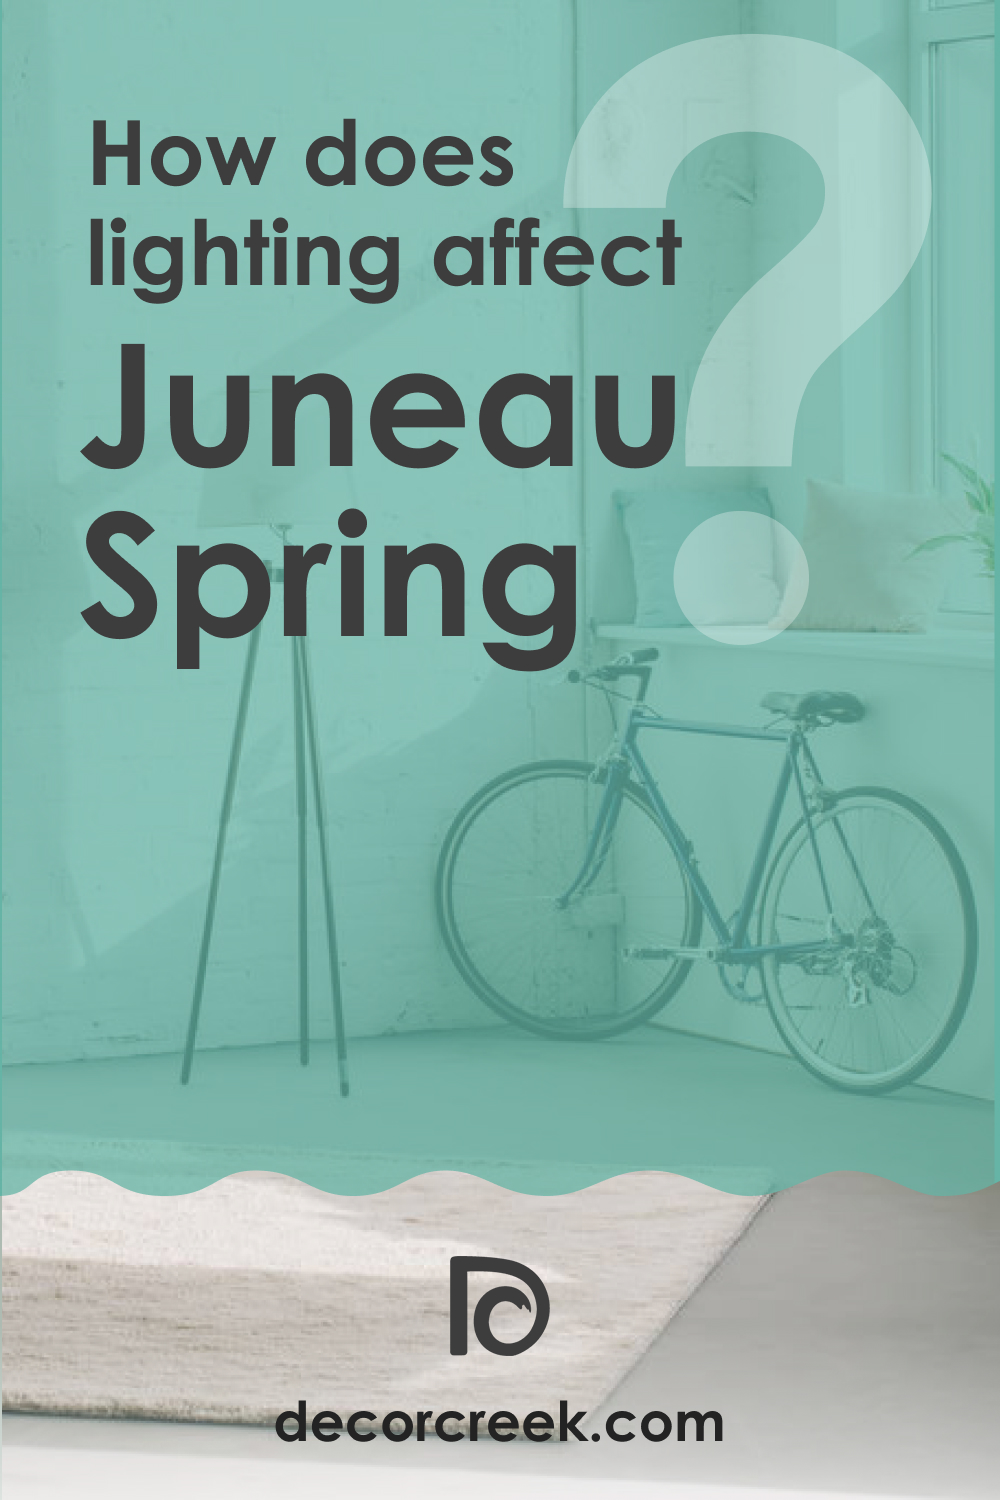 How Does Lighting Affect Juneau Spring 2041-40?